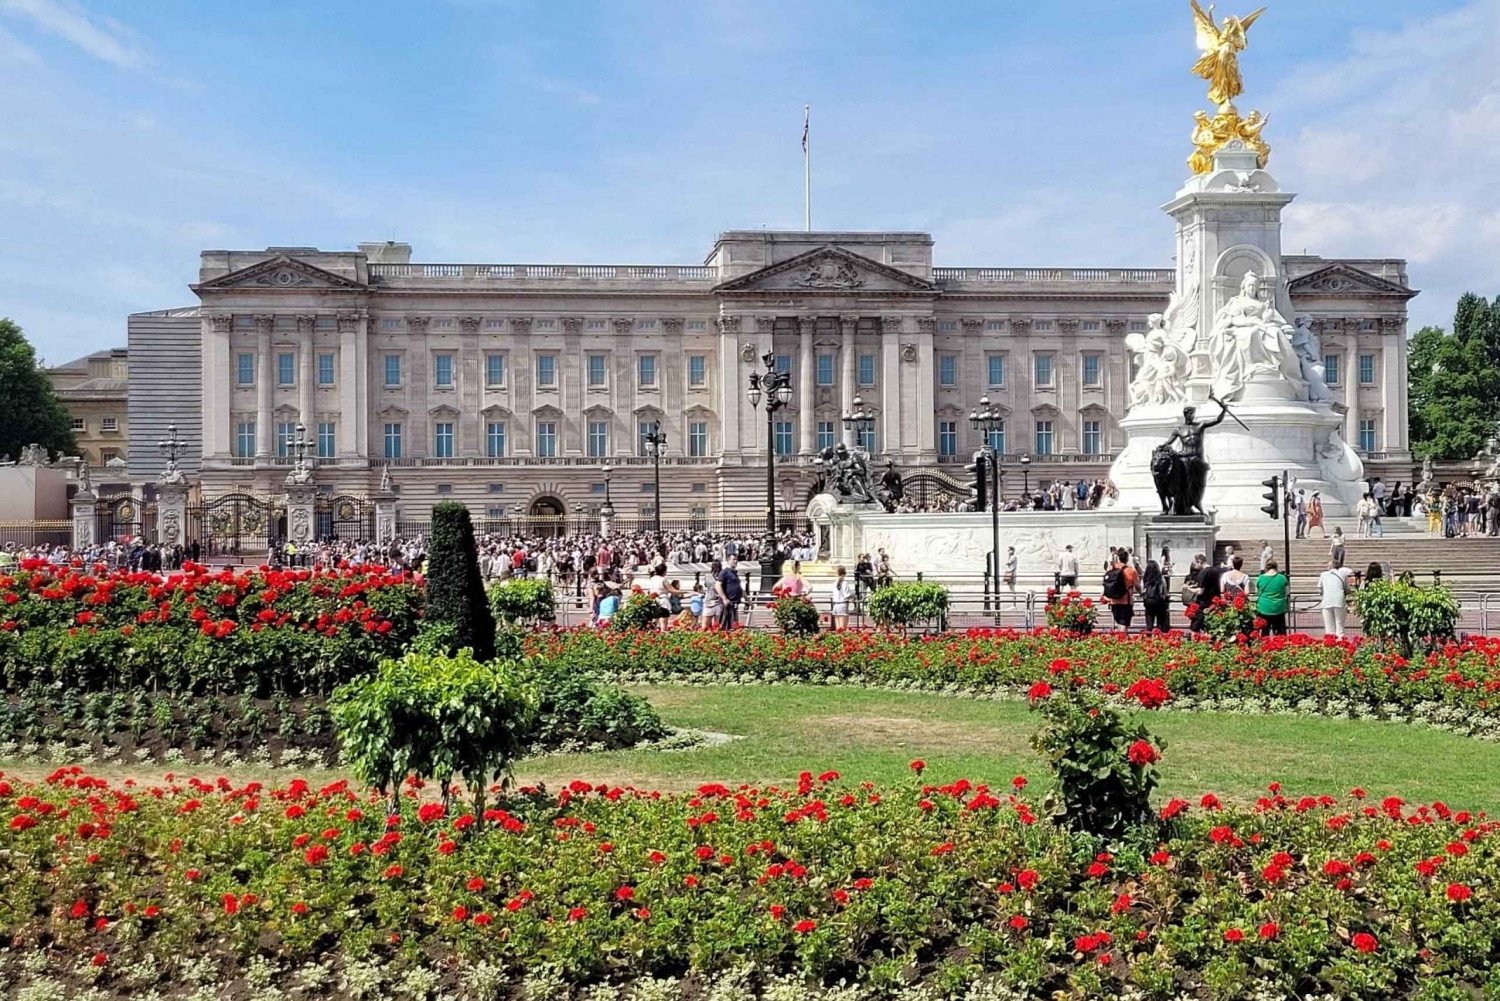 London - Kunglig rundtur Royal Tour & Buckingham Palace eller Royal Mews tillval